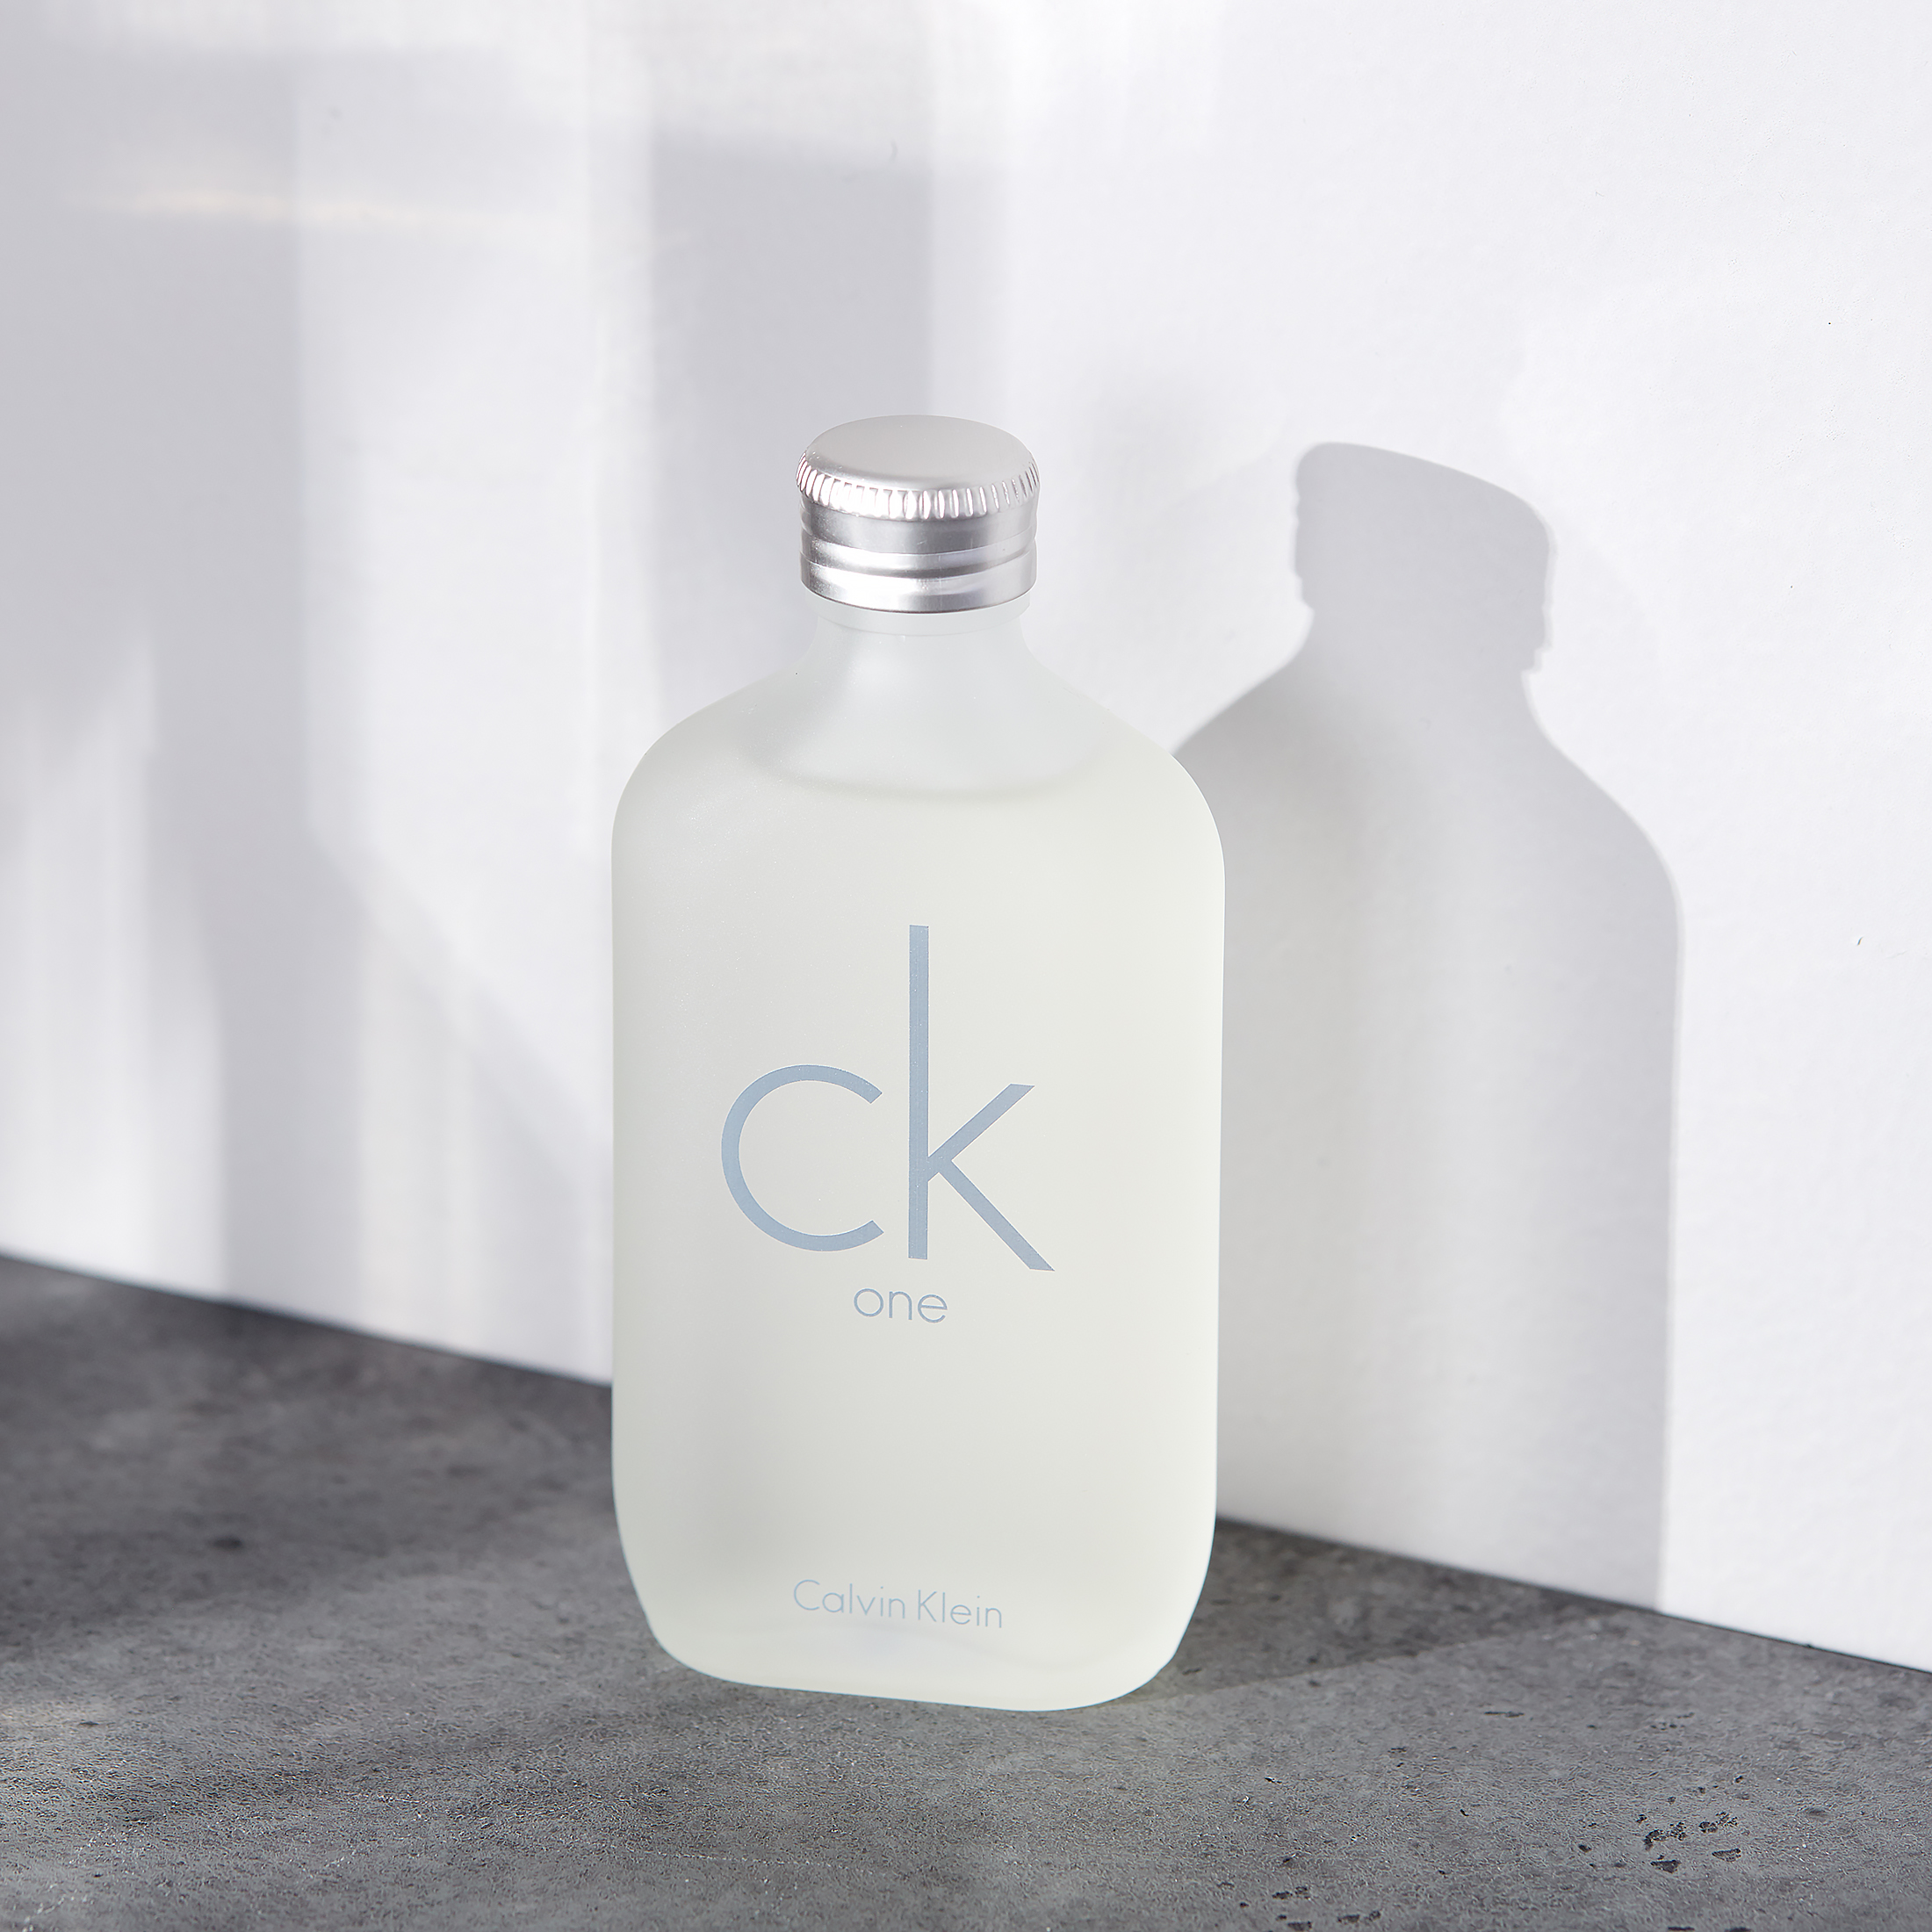 Calvin Klein Ck One Eau De Toilette Spray, Unisex Perfume, 3.4 Oz - image 6 of 8